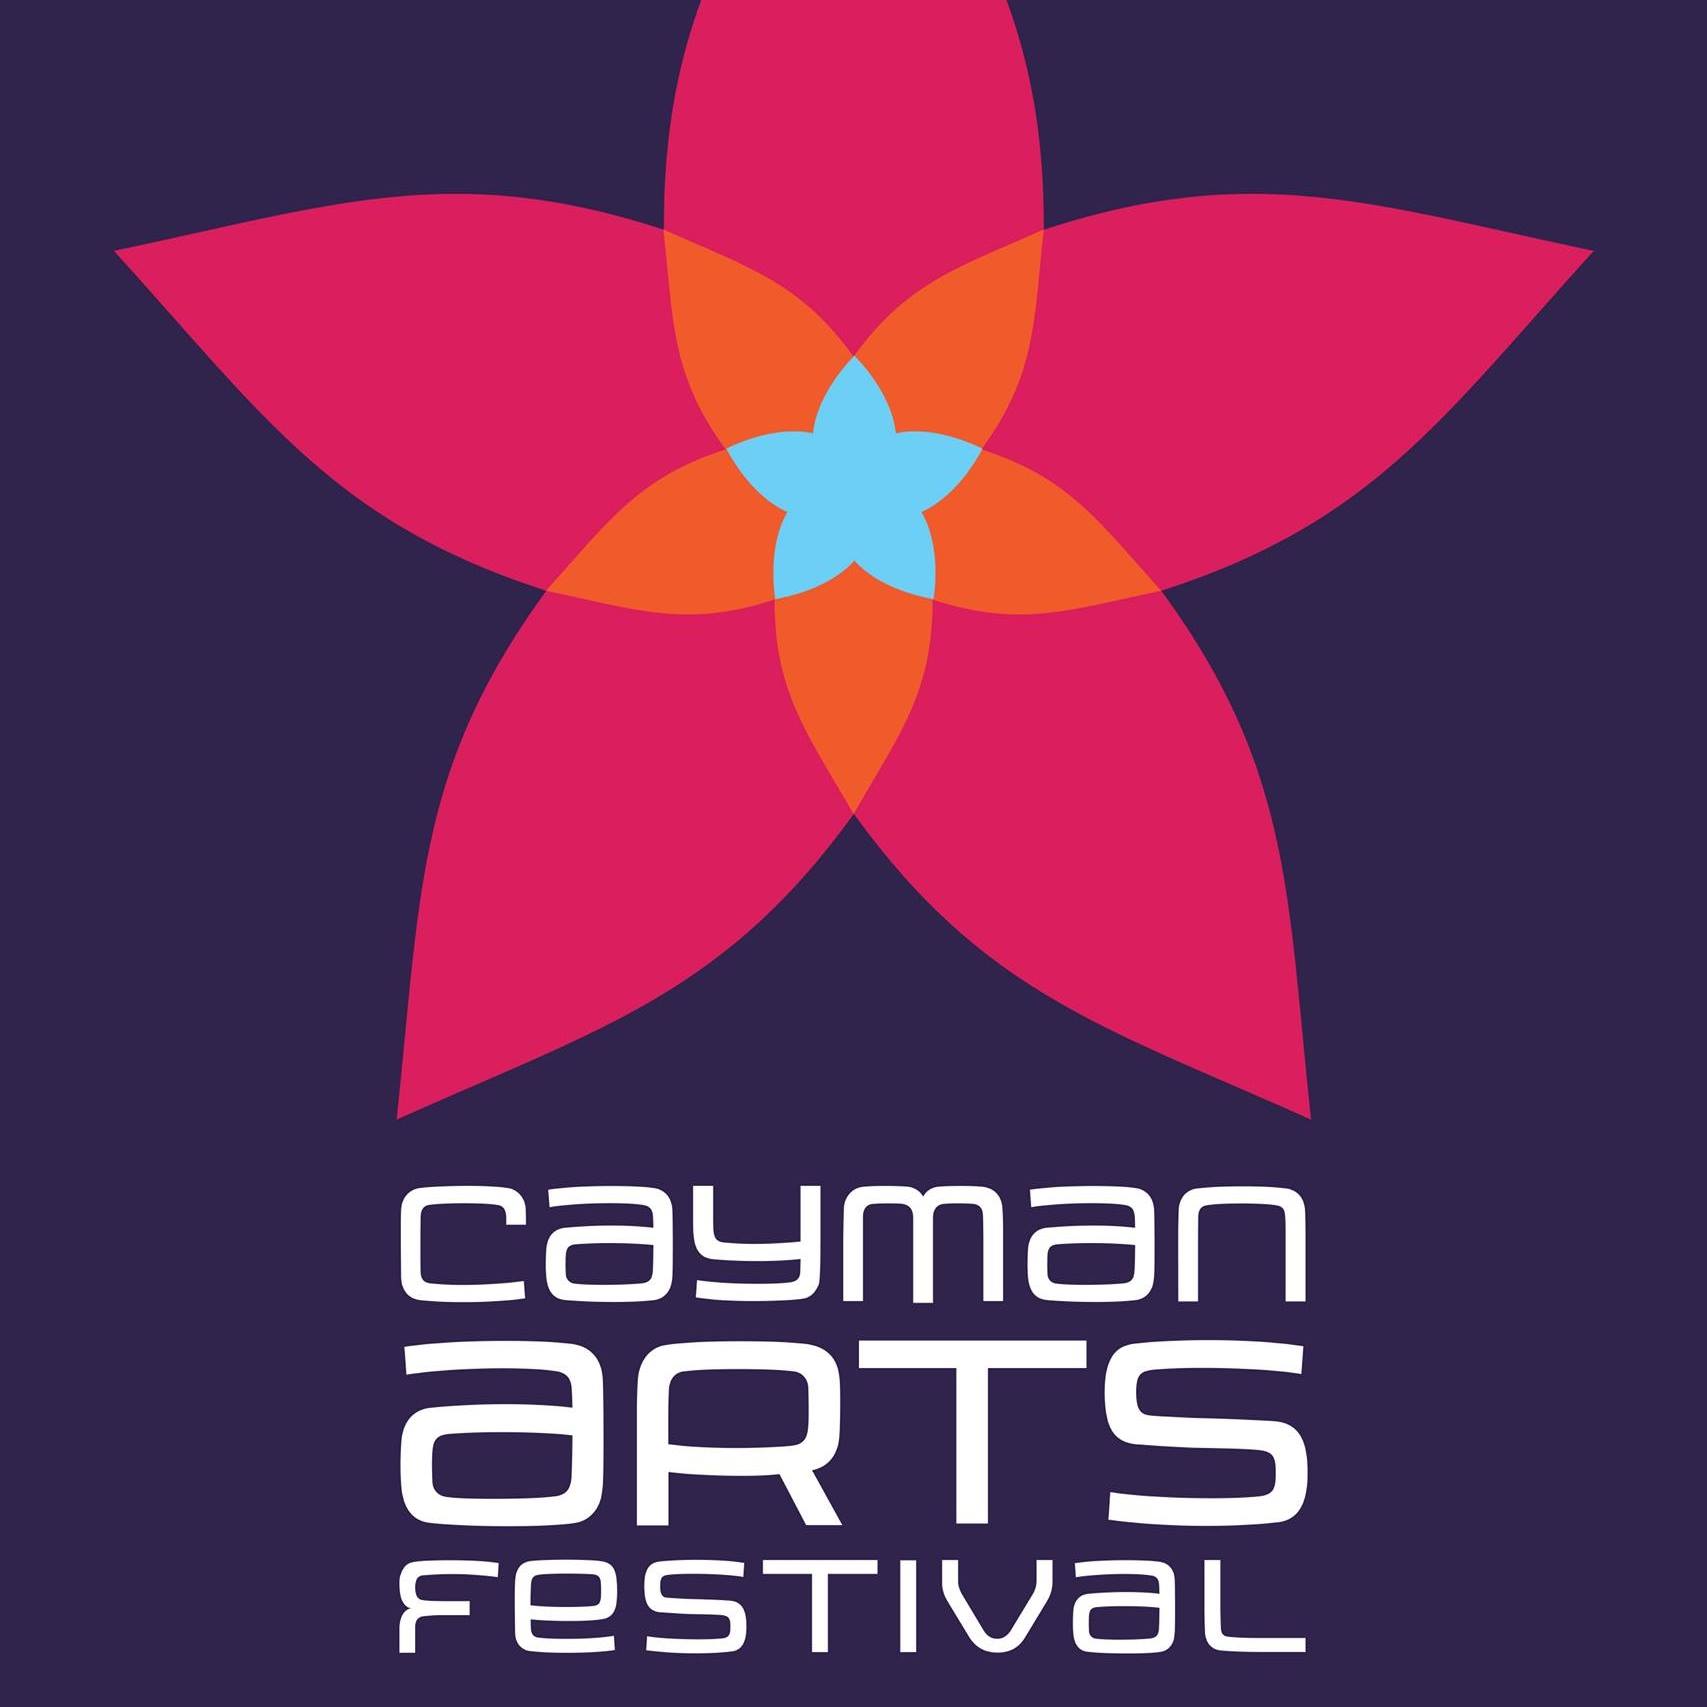 Cayman Arts Festival